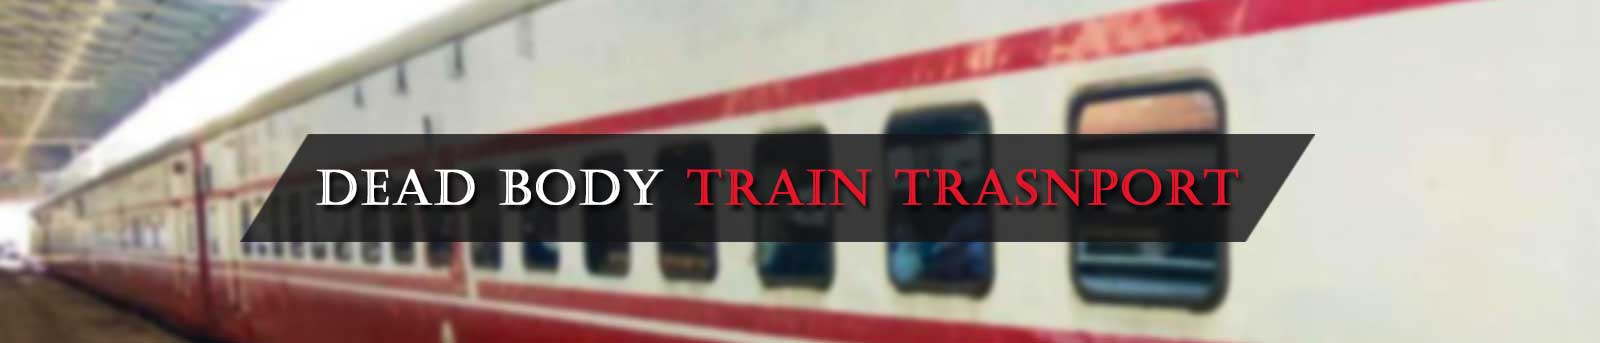 Dead Body Train Trasnport